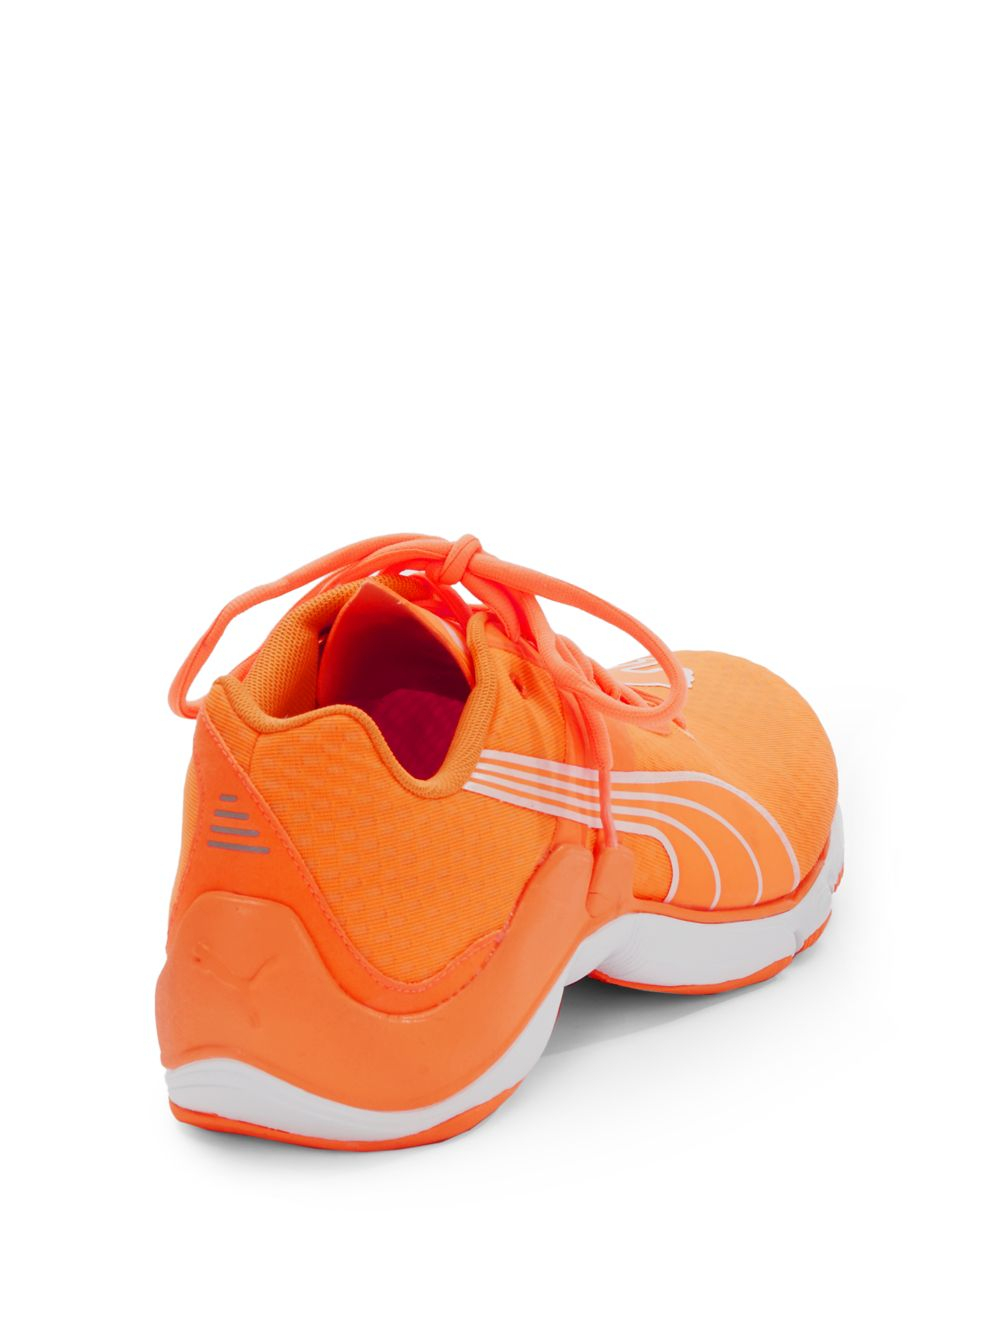 puma mobium elite glow running shoes